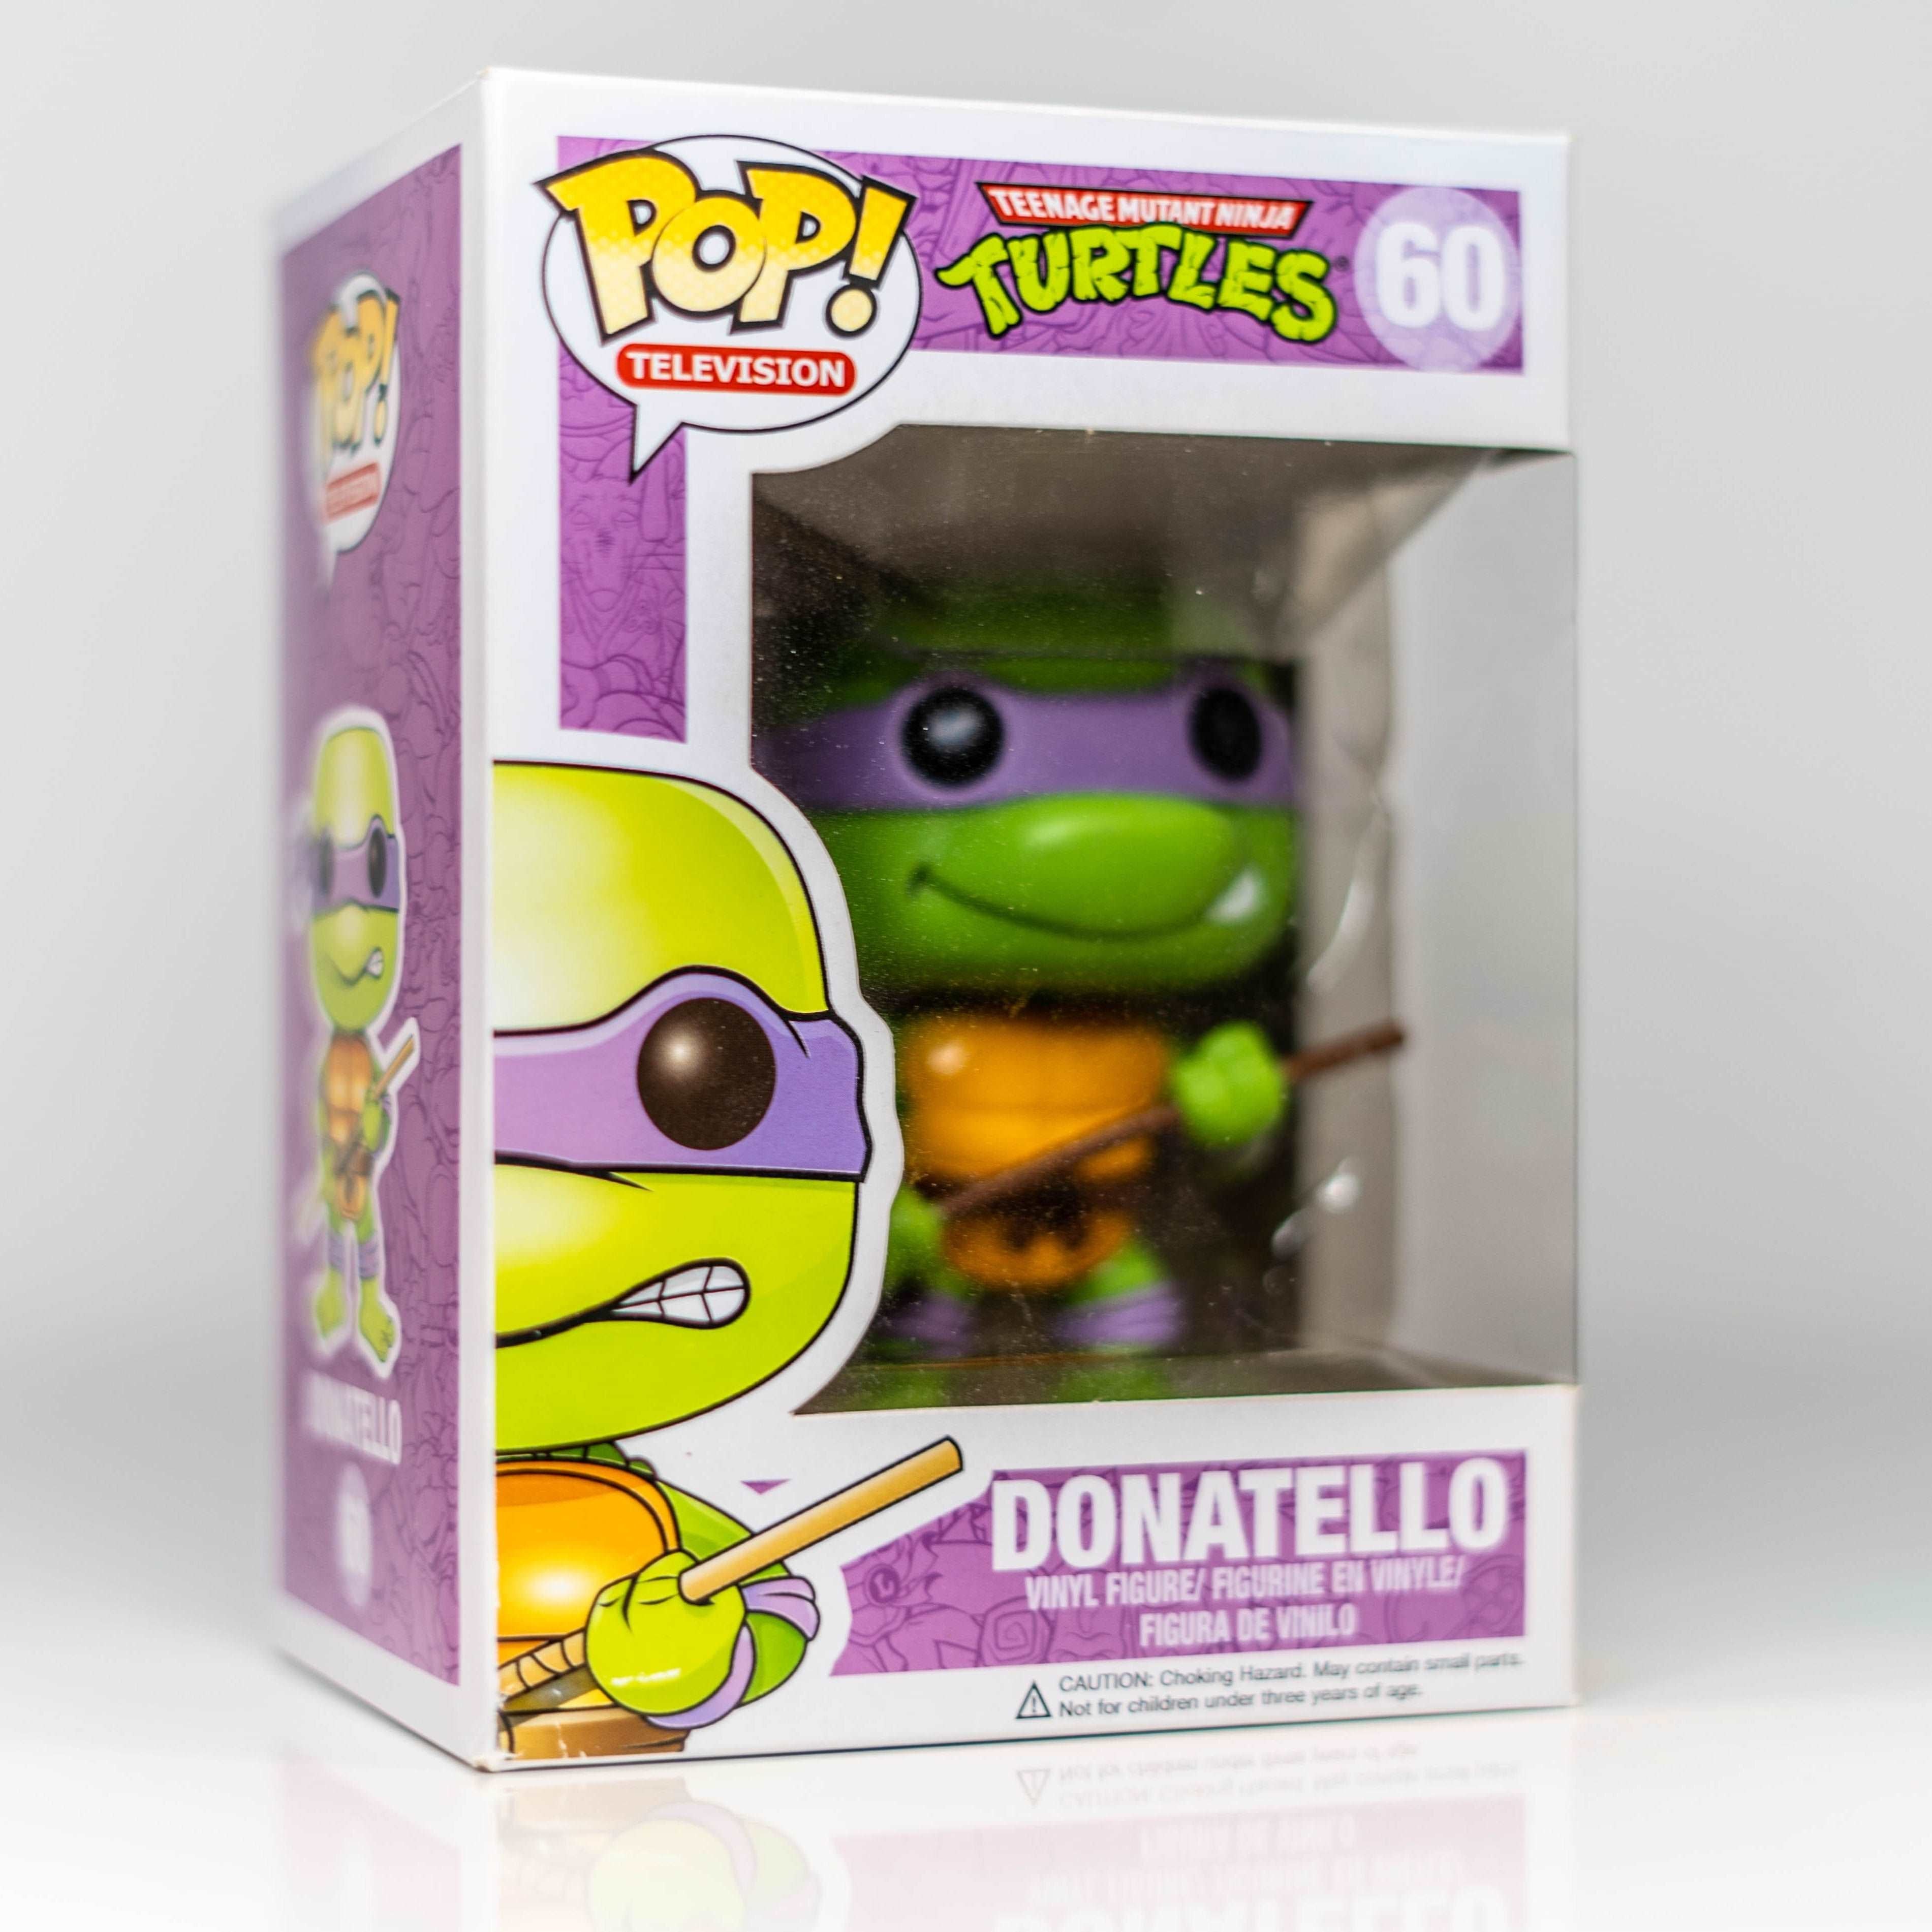 Funko Pop! Donatello 60 - Vaulted